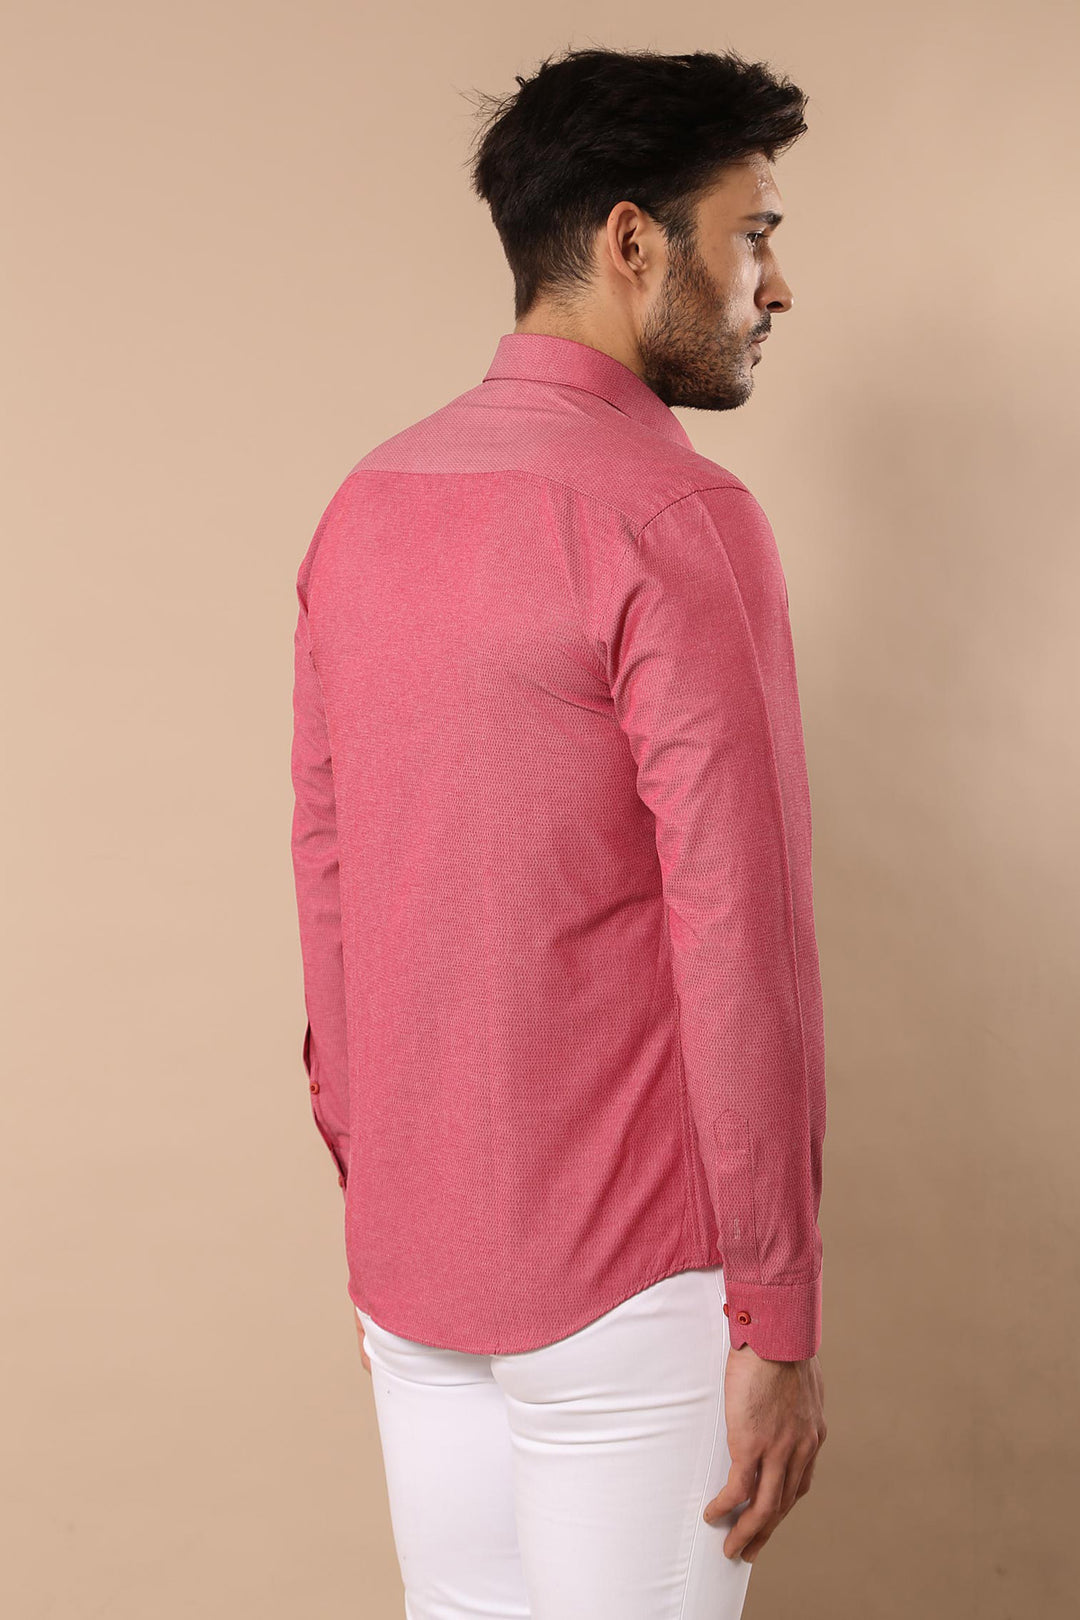 Dot-Patterned Pink Shirt | Wessi